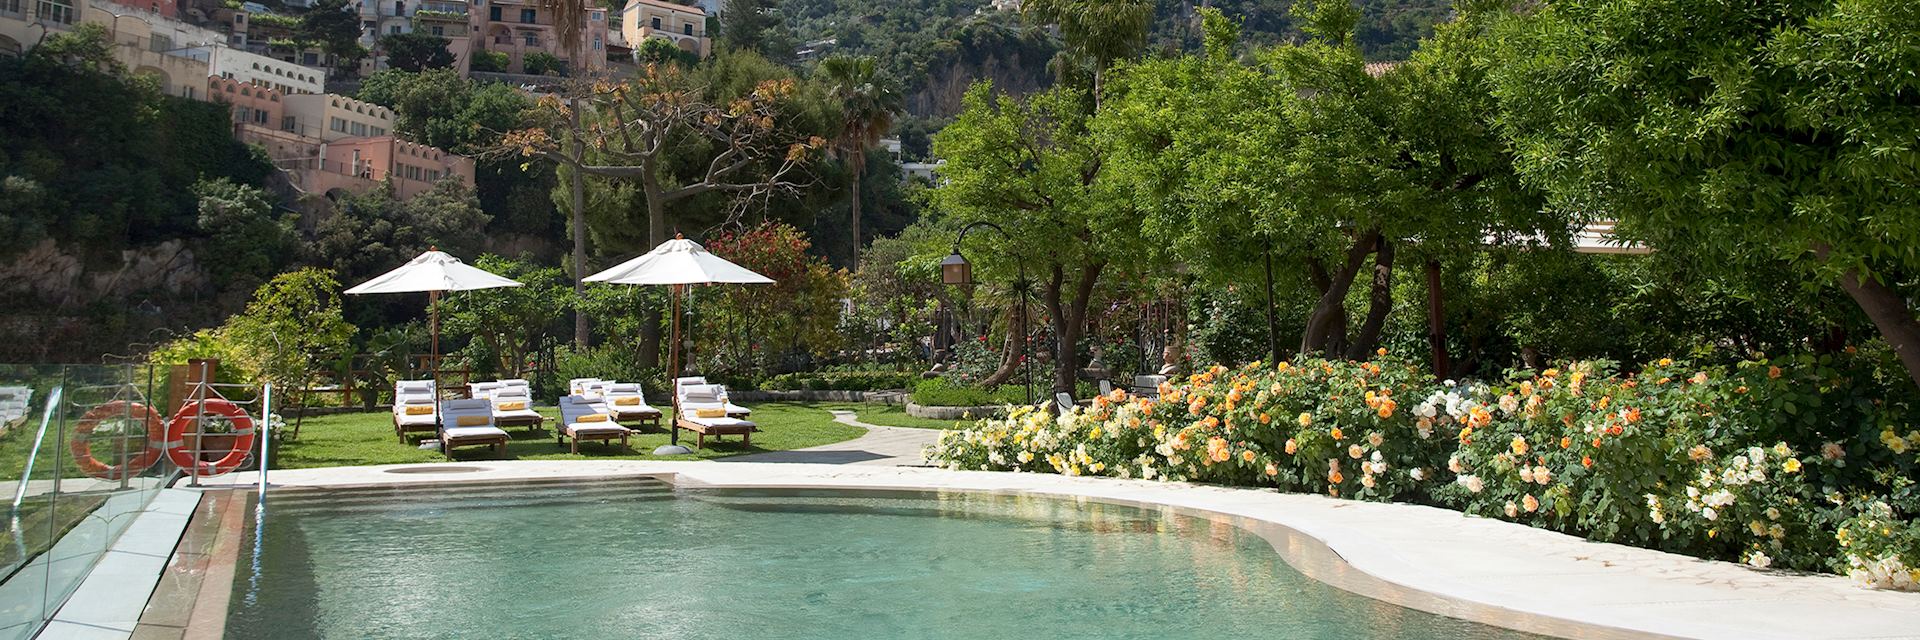 The pool at Palazzo Murat, Positano